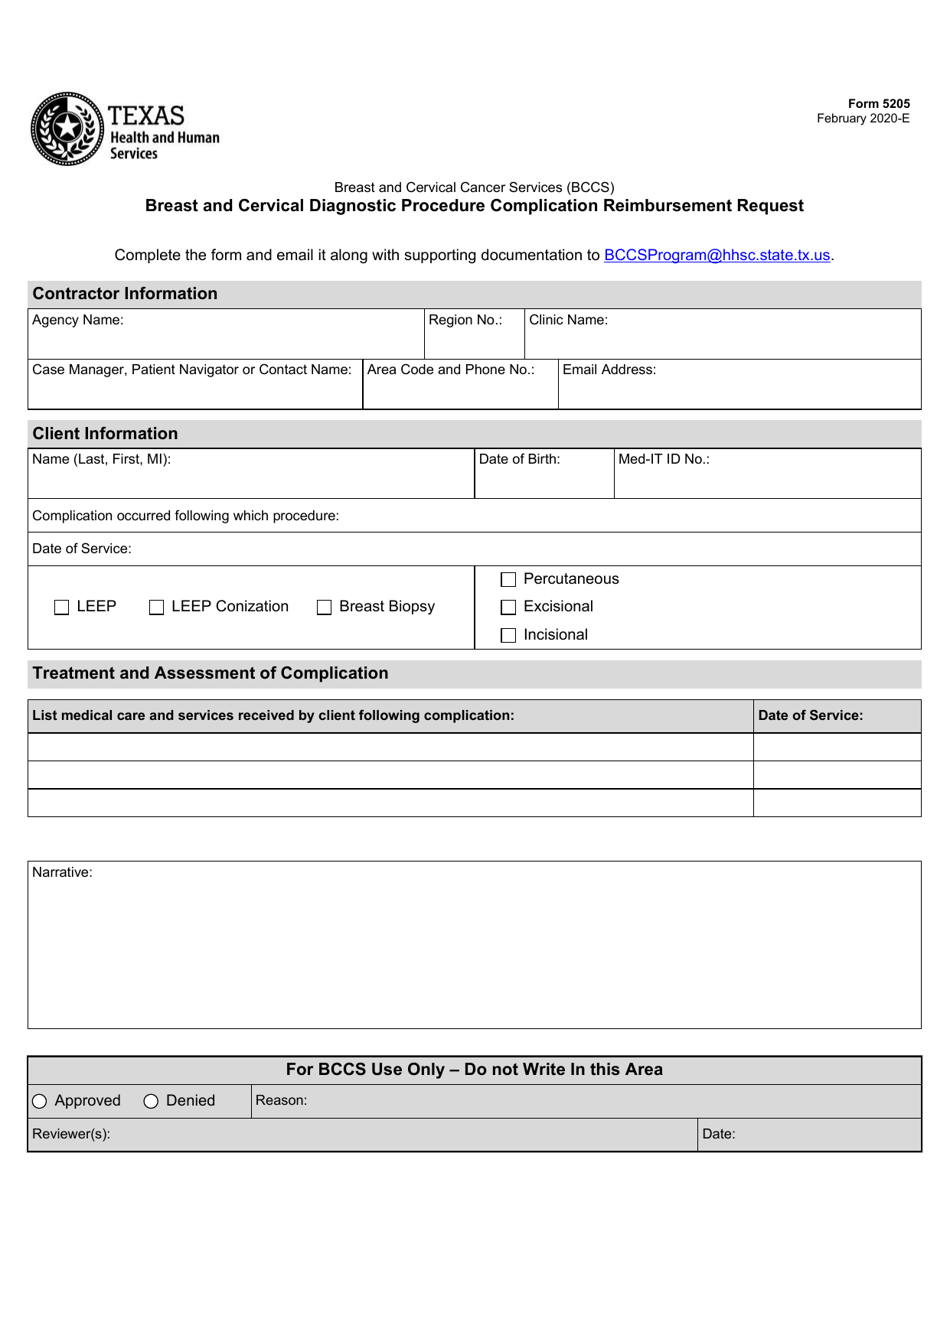 Form 5205 Breast and Cervical Diagnostic Procedure Complication Reimbursement Request - Texas, Page 1